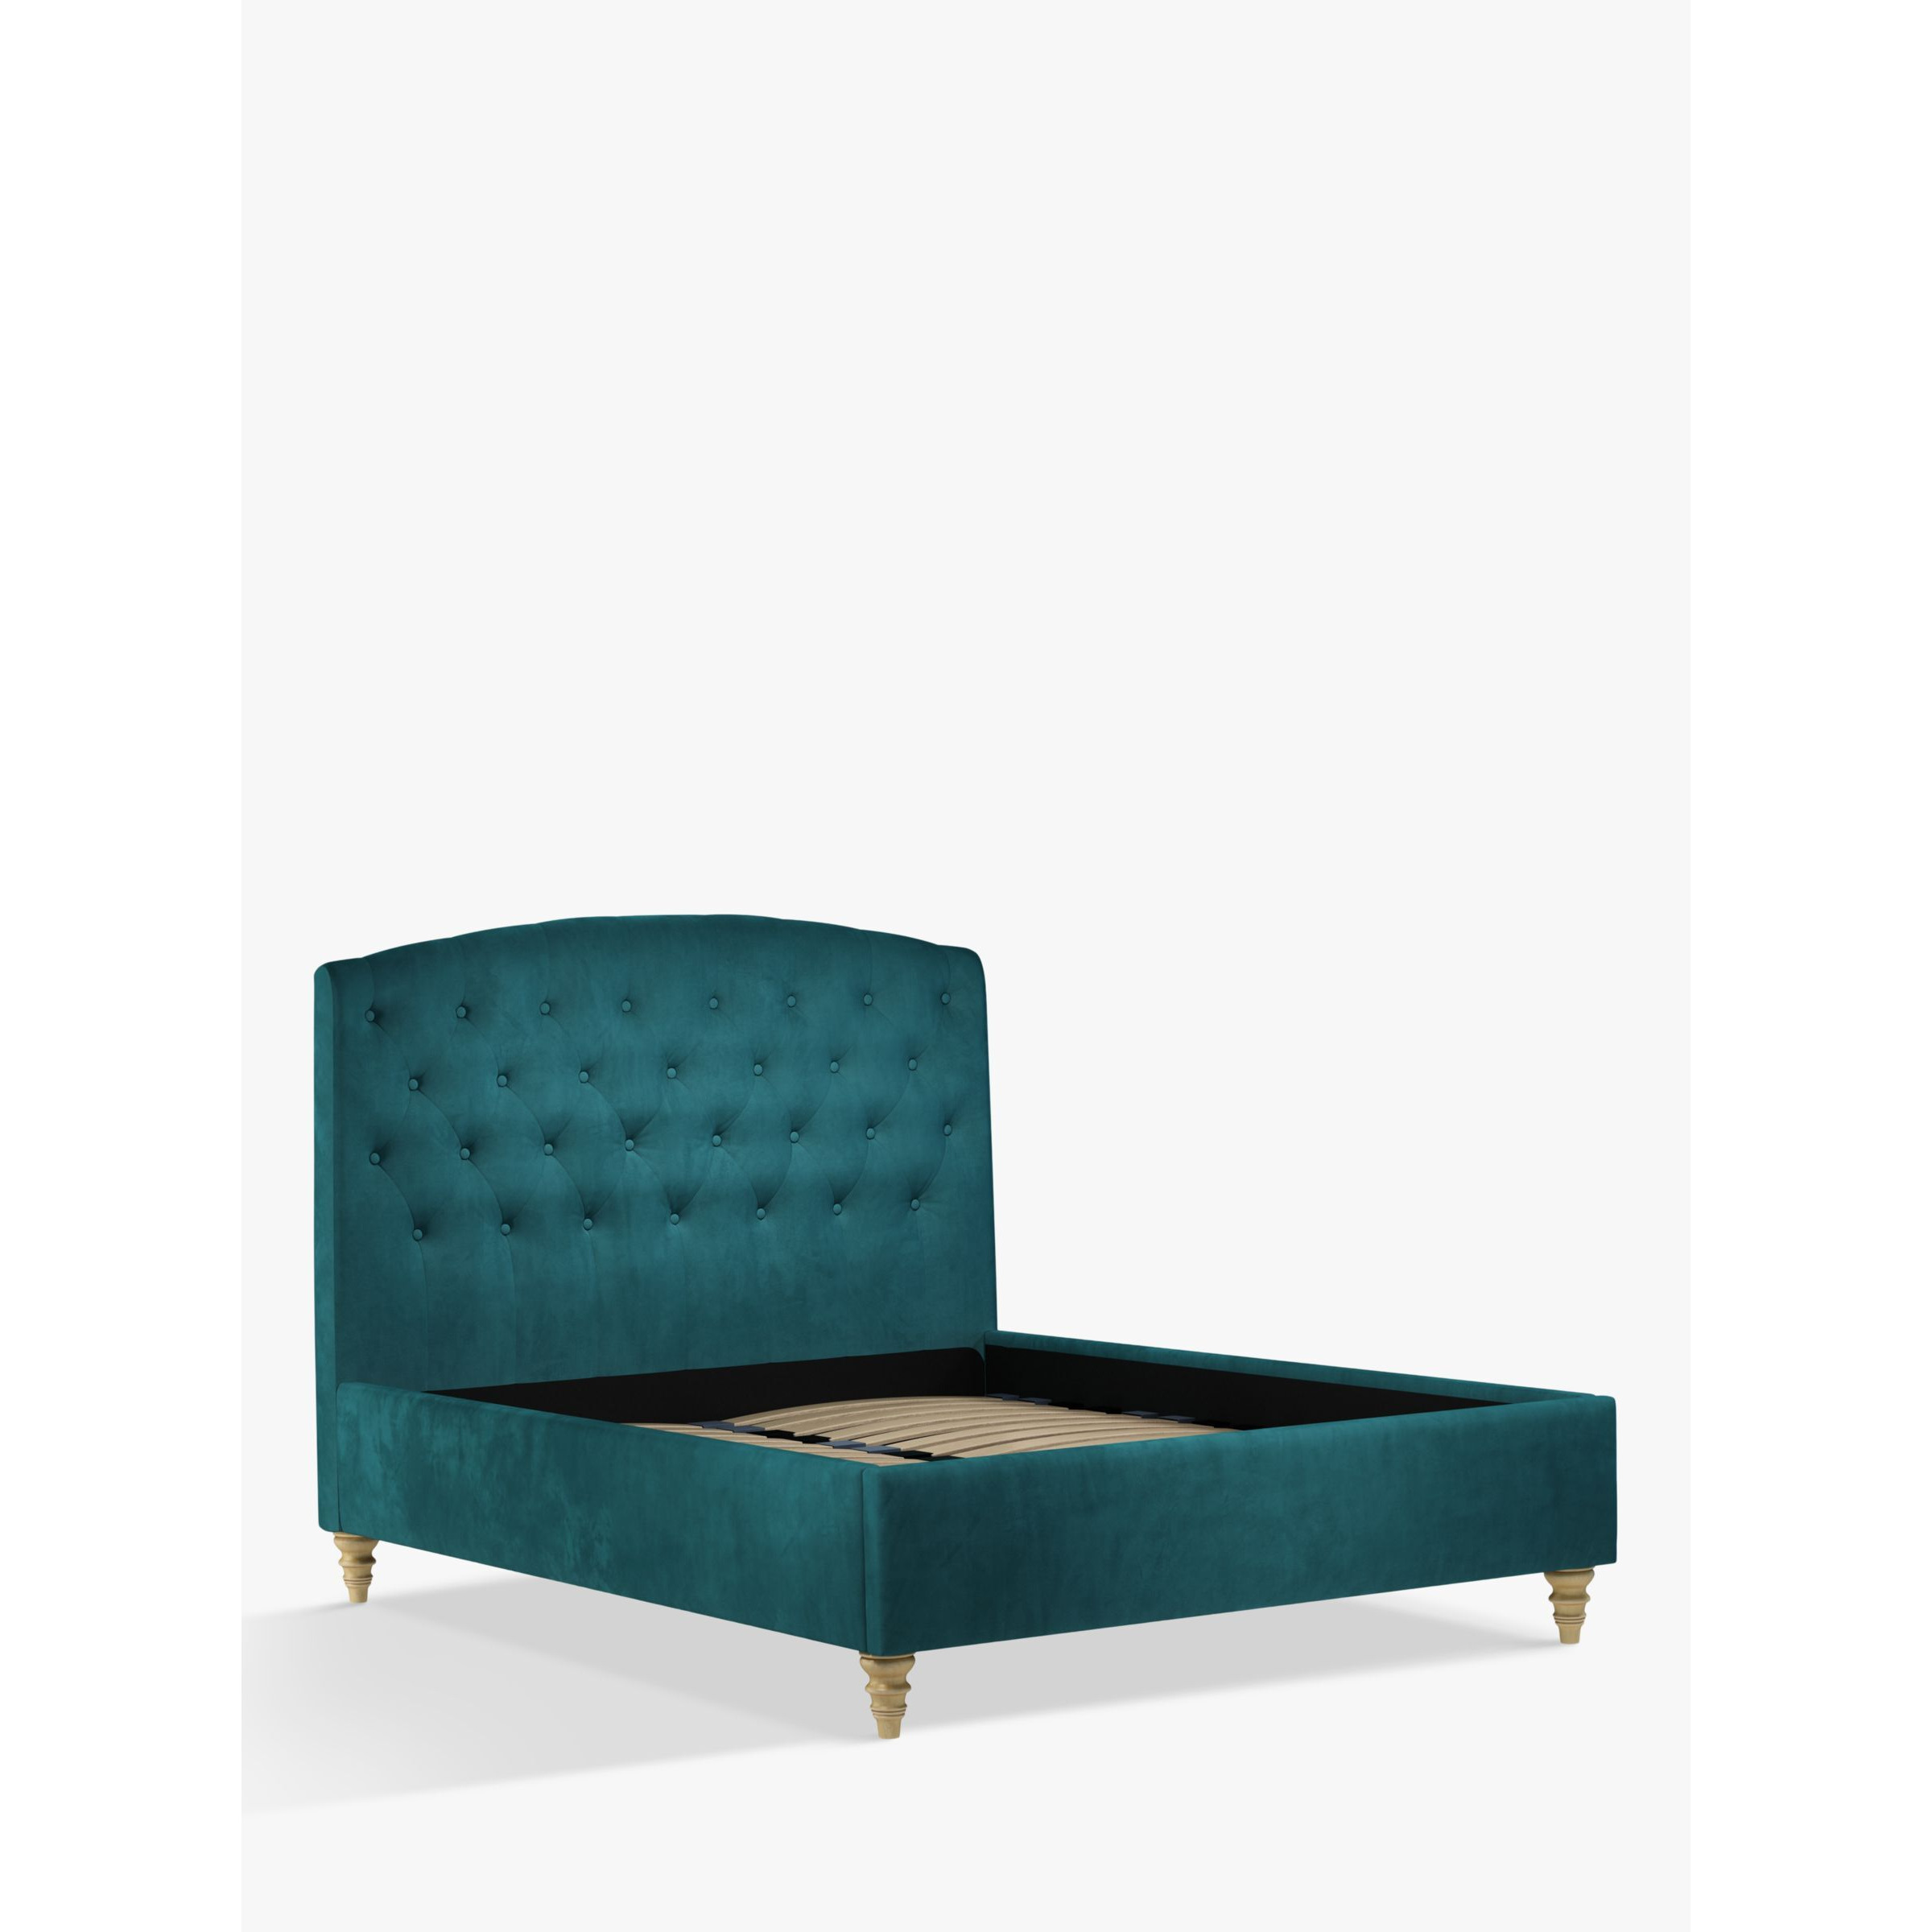 John Lewis Rouen Upholstered Bed Frame, King Size - image 1